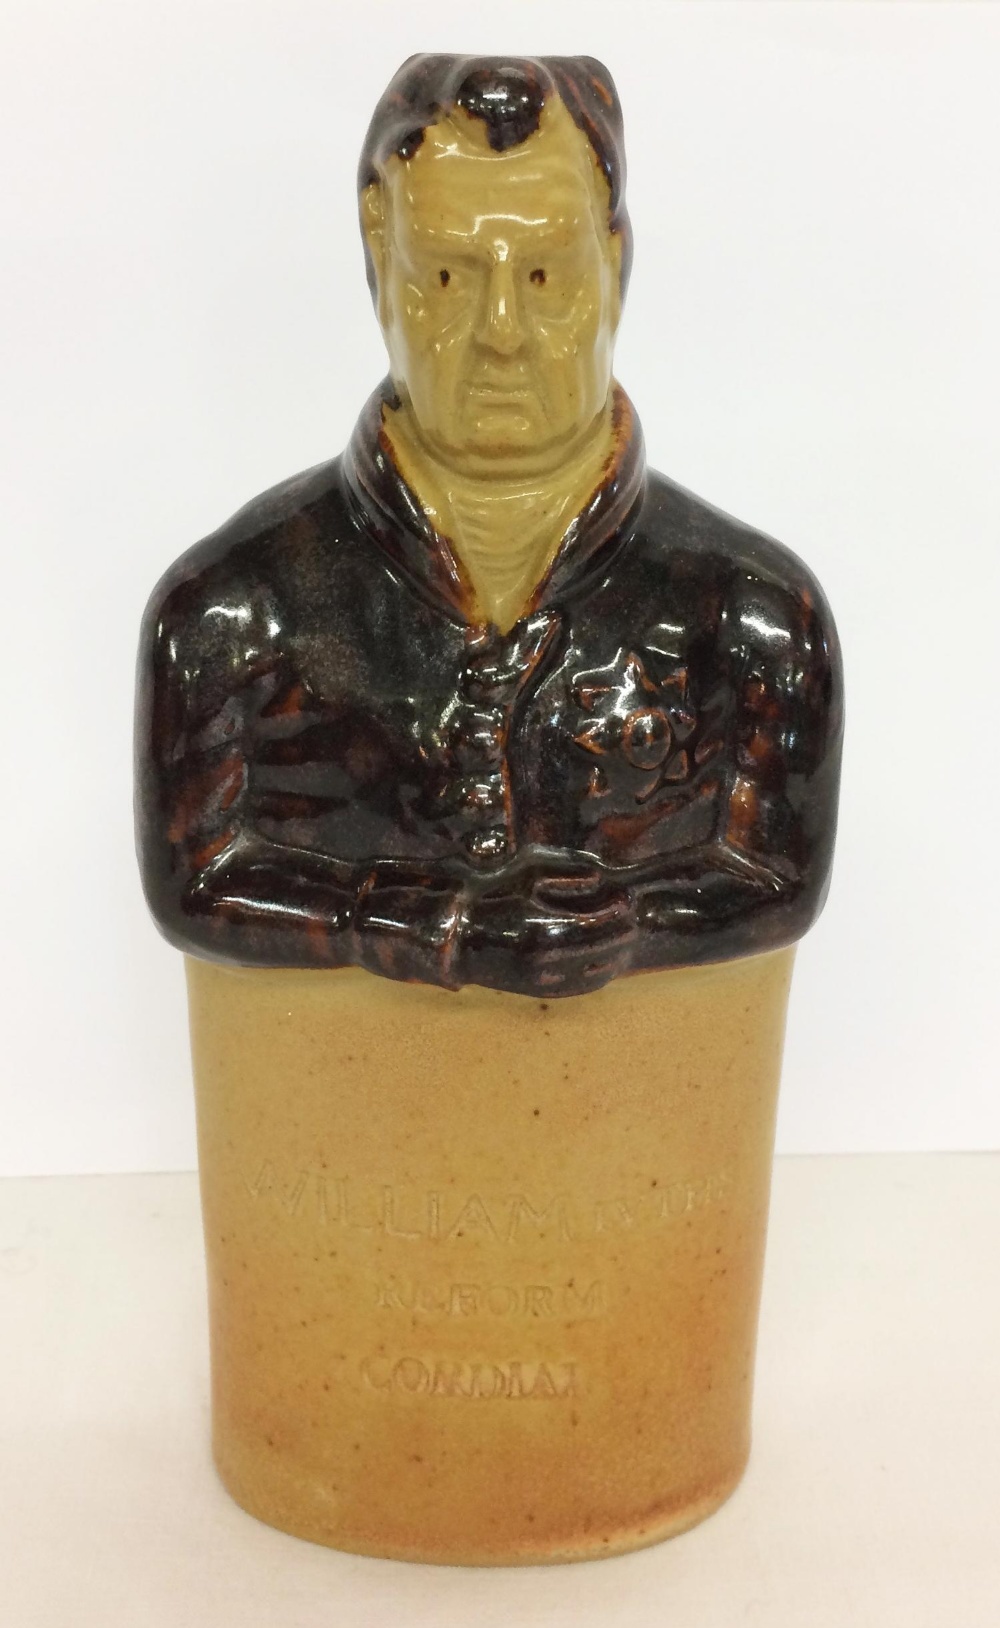 C19th Salt Glazed Stoneware Bottle 'Wiliam IV Reform Flask London' by Denby & Belper Bournes